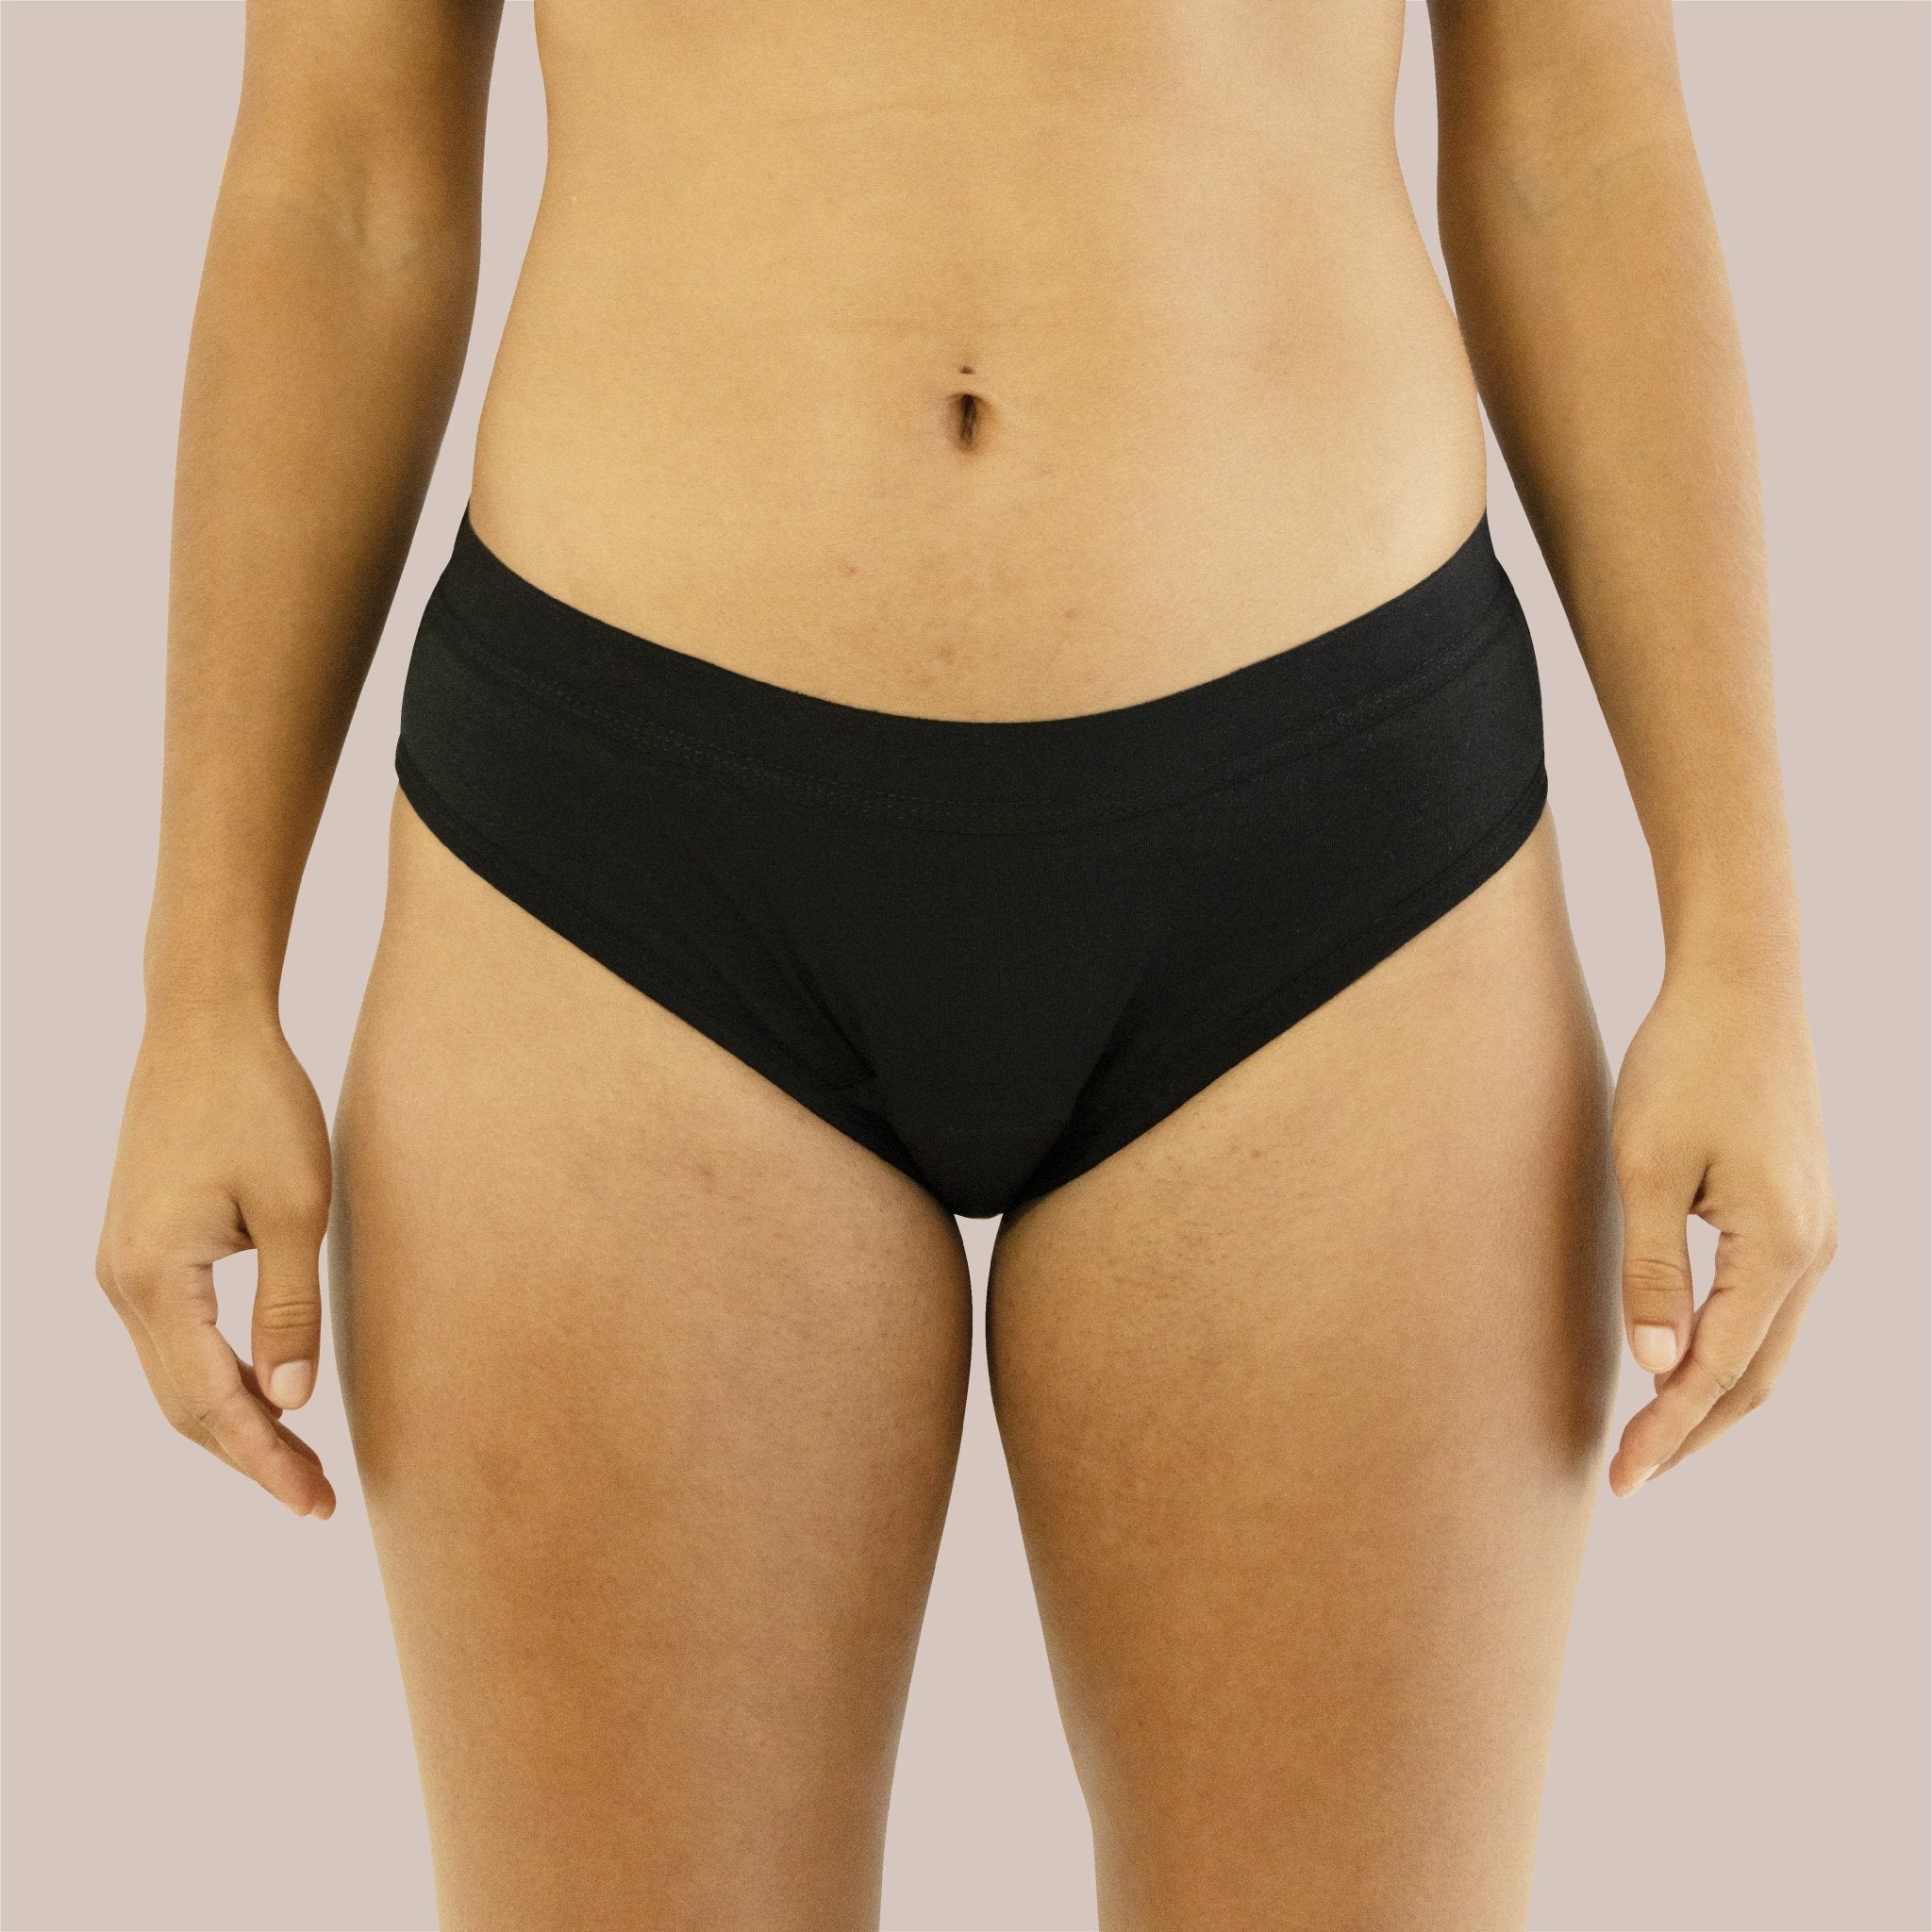 Bikini Underwear Period Underwear (Small to Light Leaks)